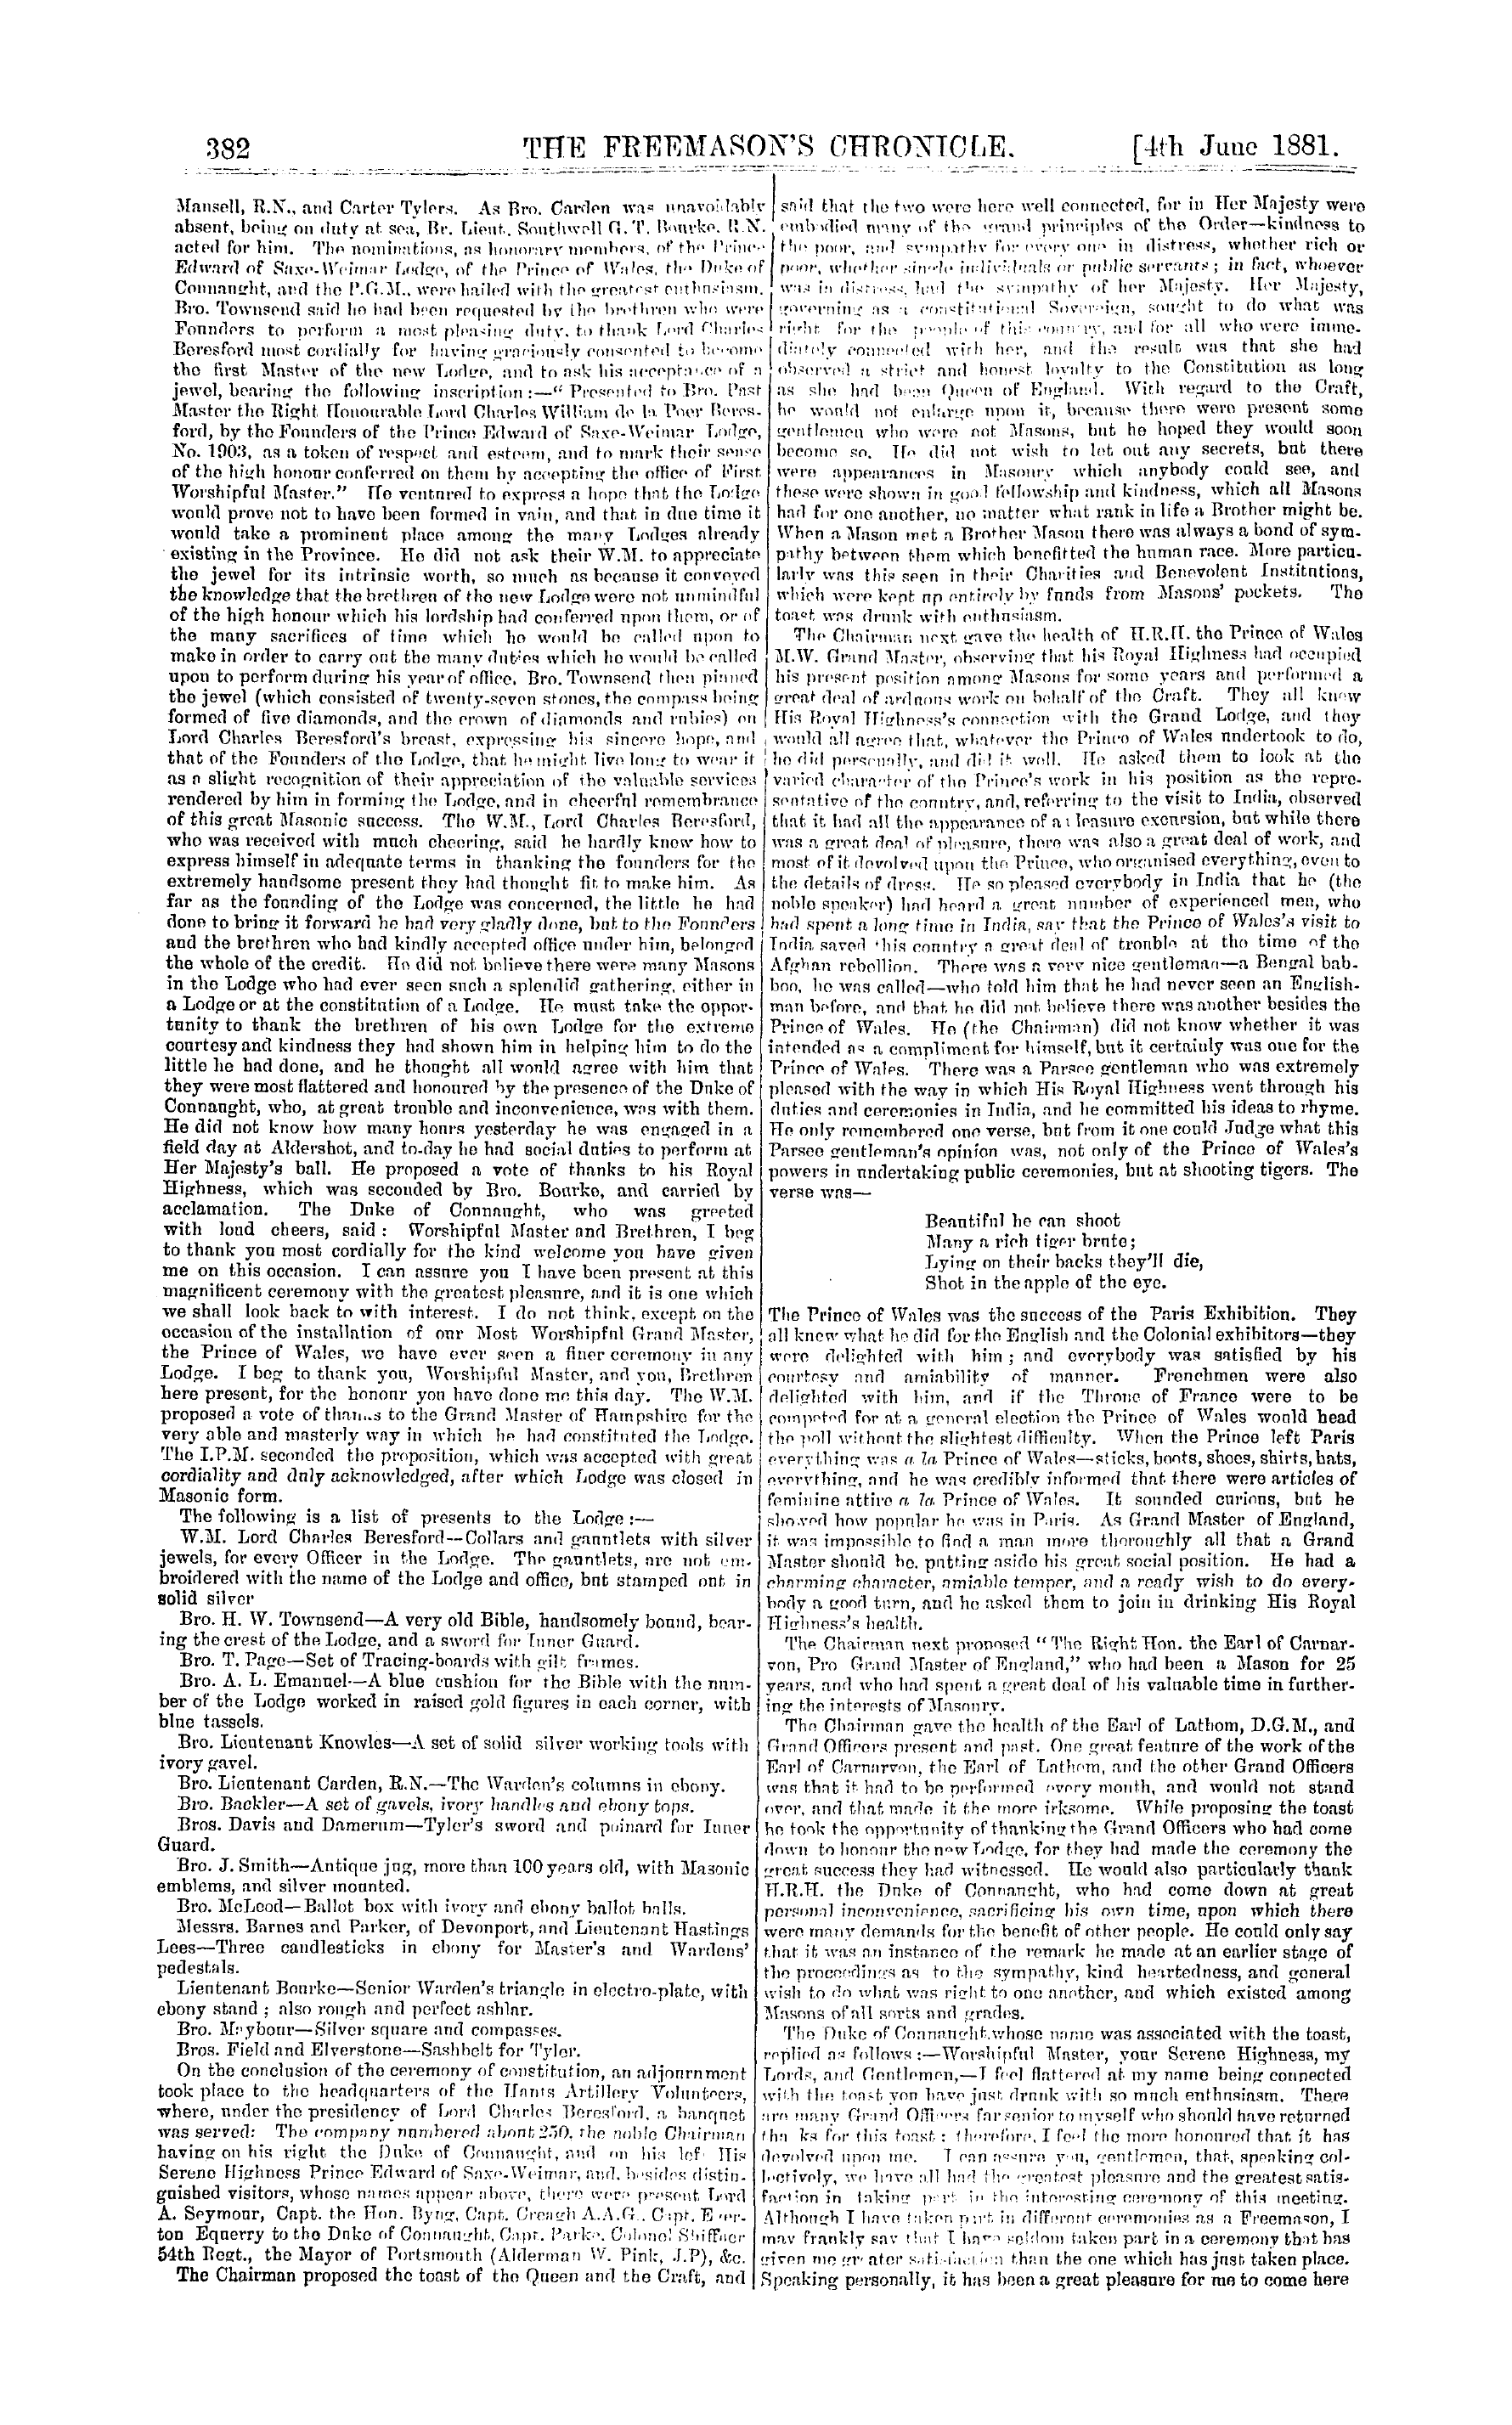 The Freemason's Chronicle: 1881-06-04: 14